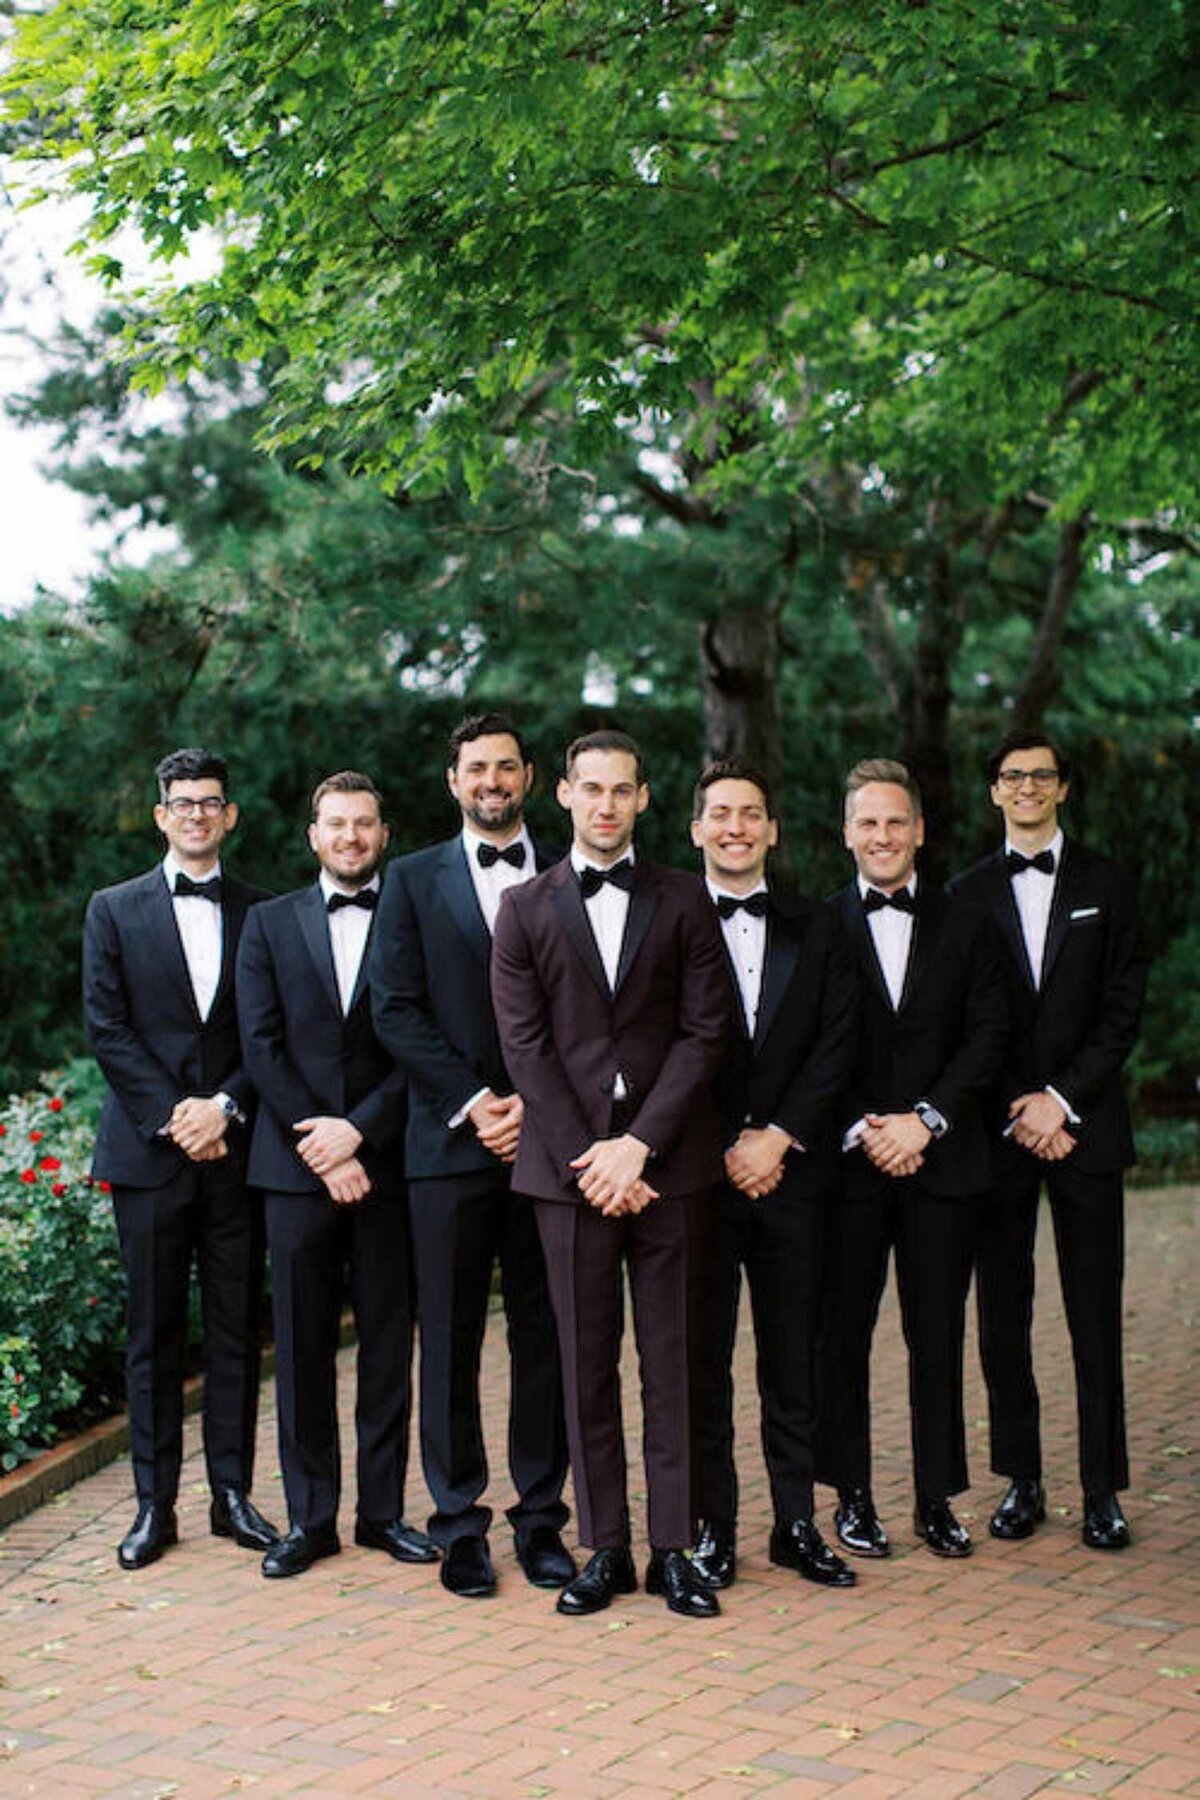 Groomsmen in black tie custom tuxedos for a luxury Chicago outdoor garden wedding.